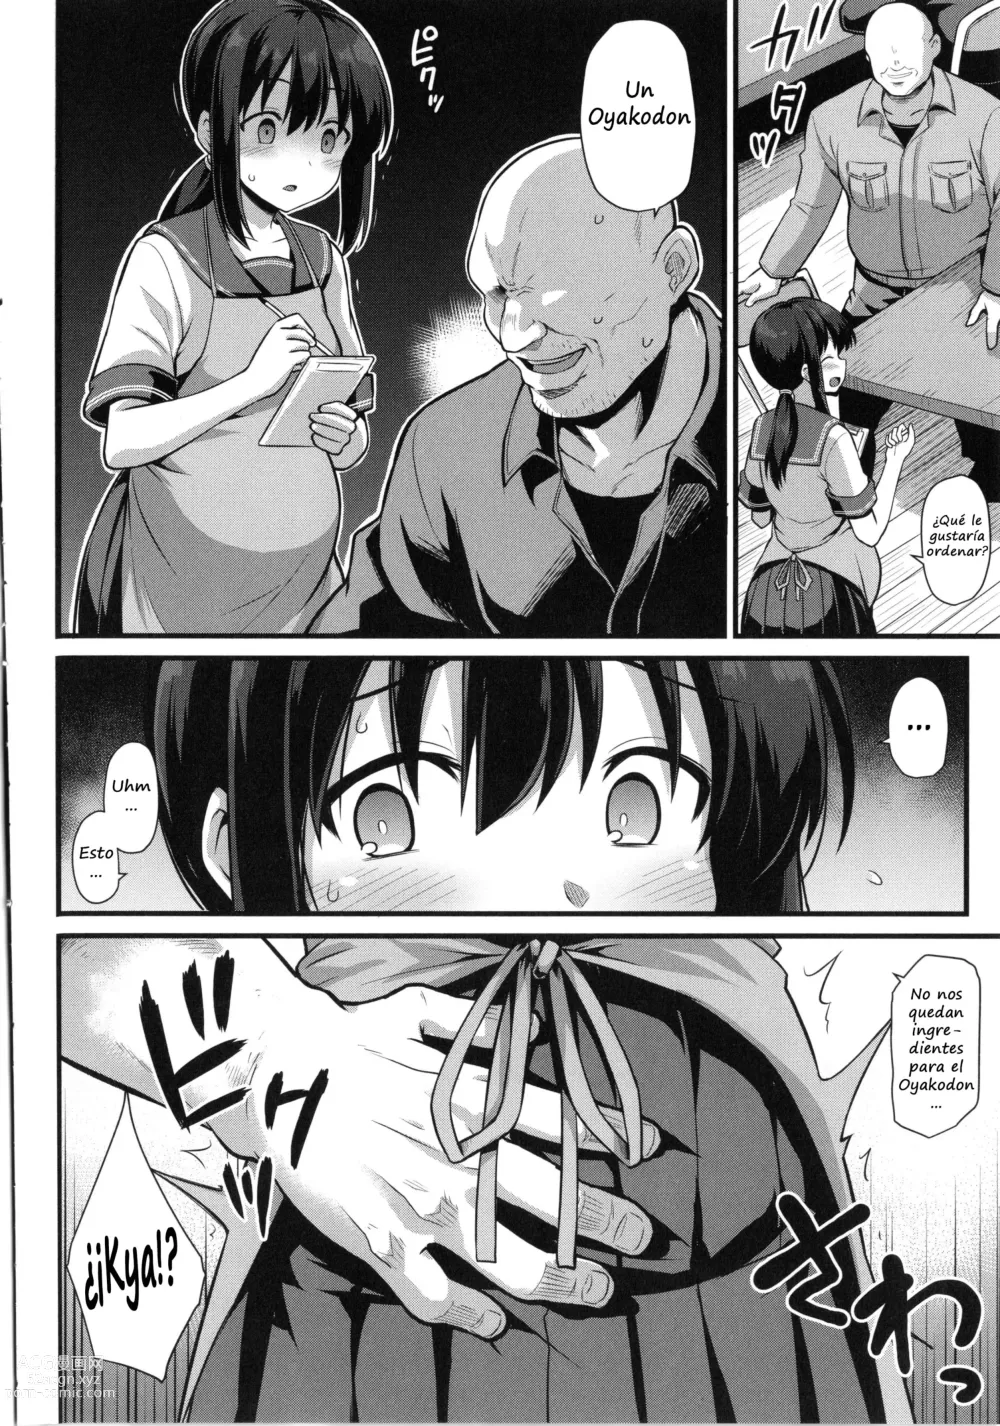 Page 10 of manga Haramase! Shiawase Oyakodon!